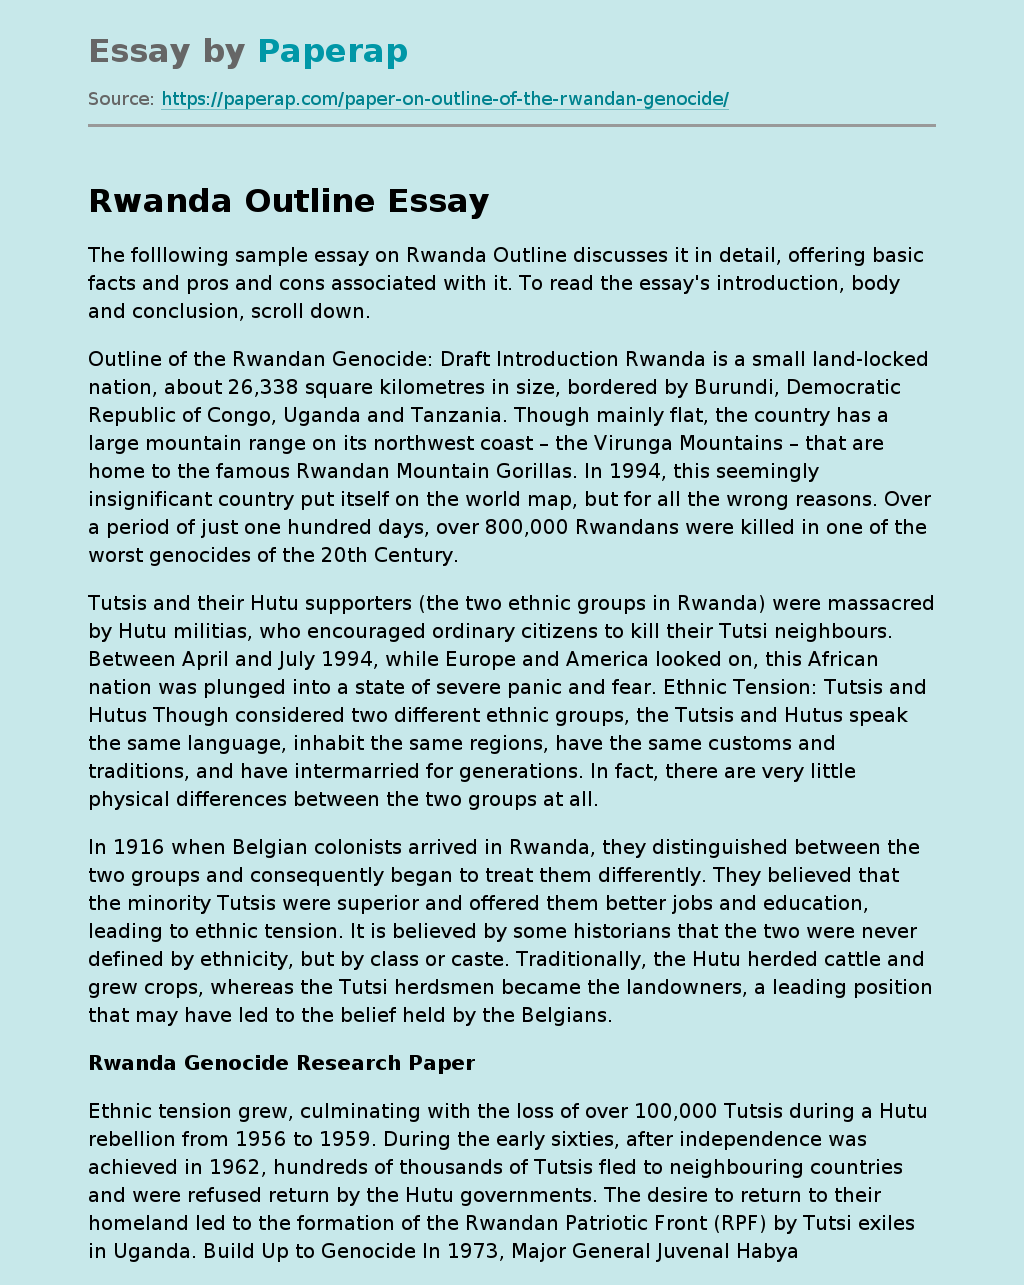 Outline of the Rwandan Genocide